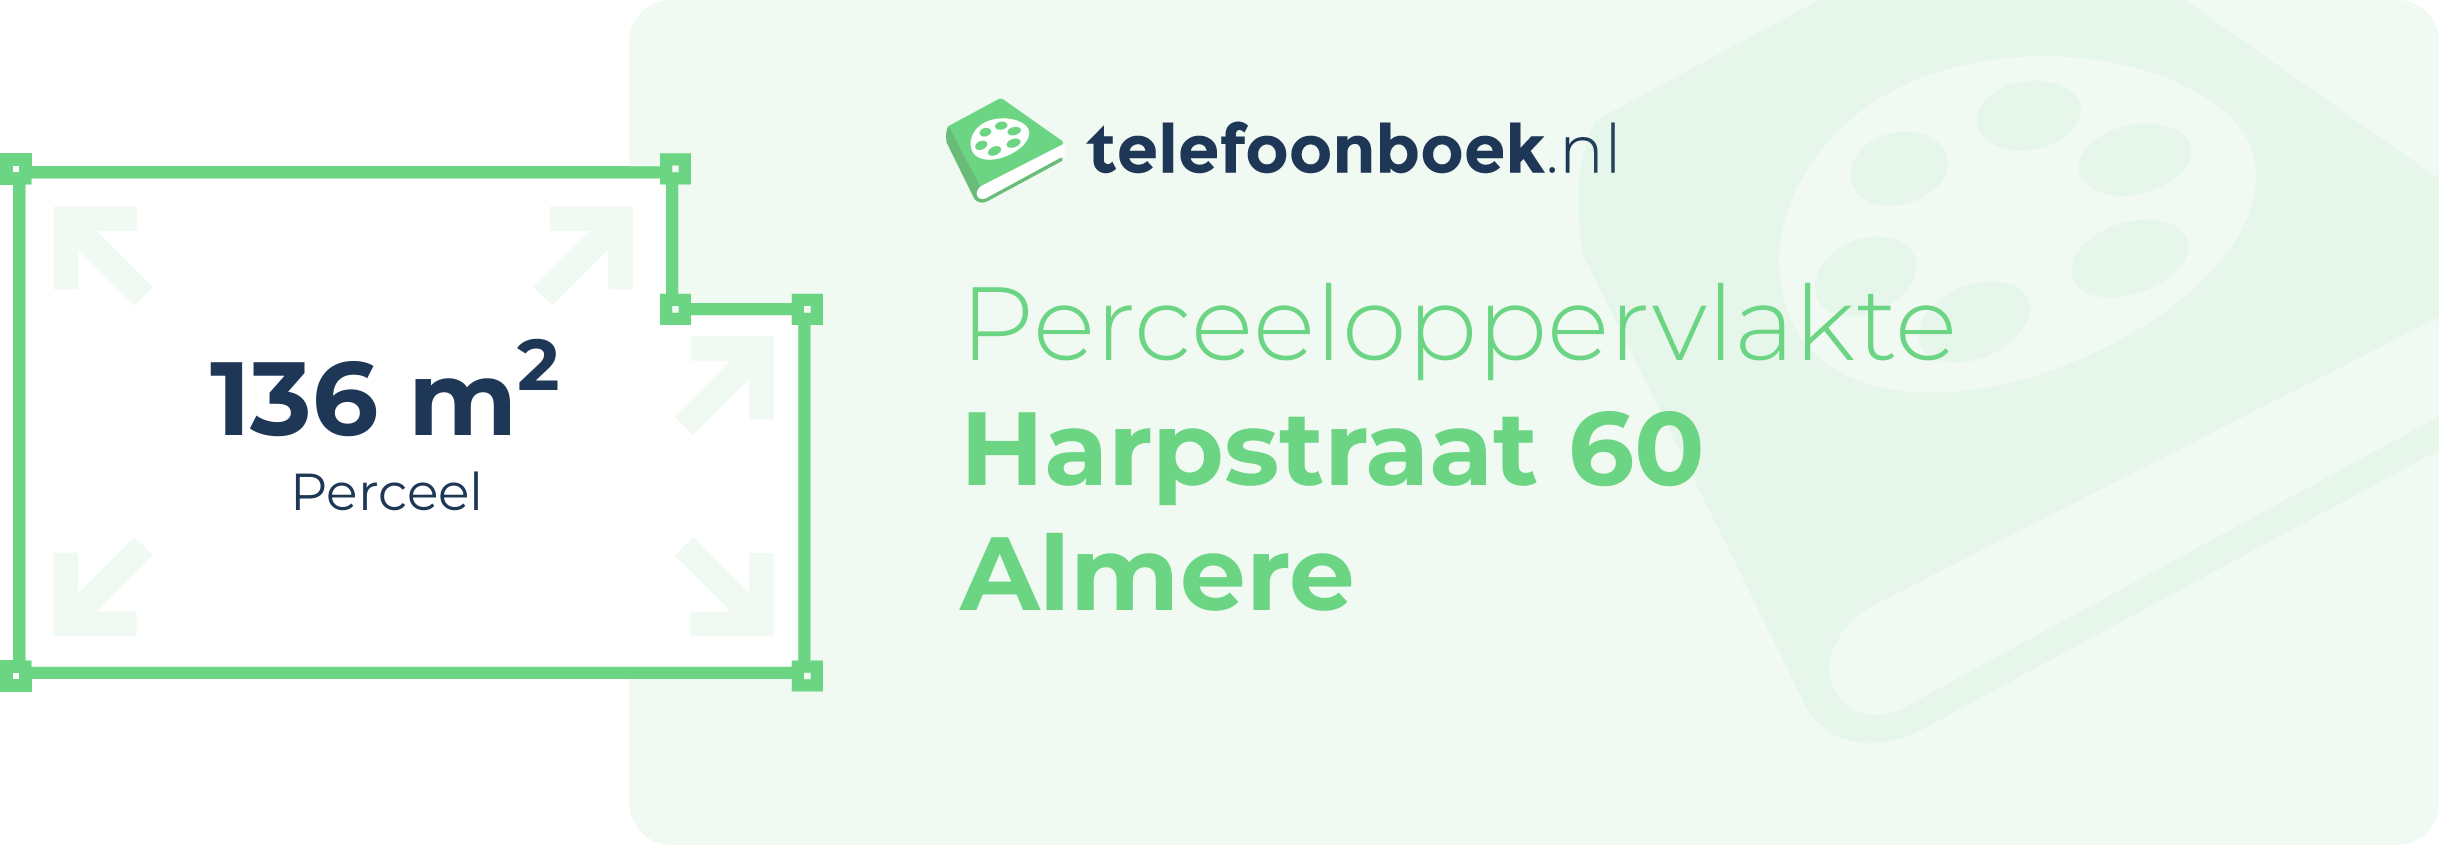 Perceeloppervlakte Harpstraat 60 Almere